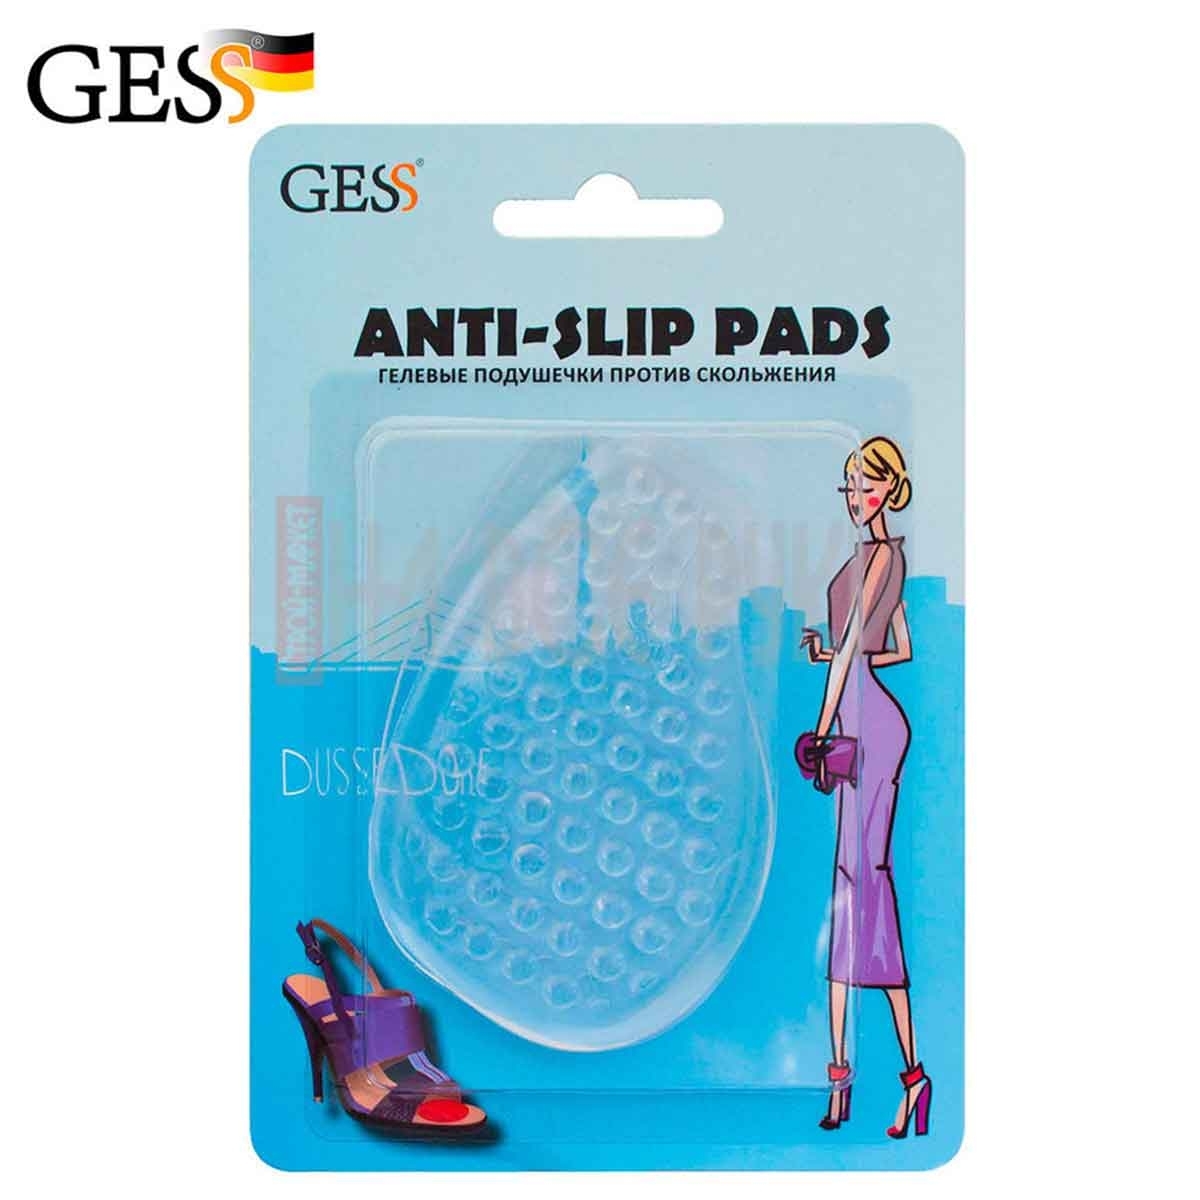    Gess Anti-Slip Pads -  